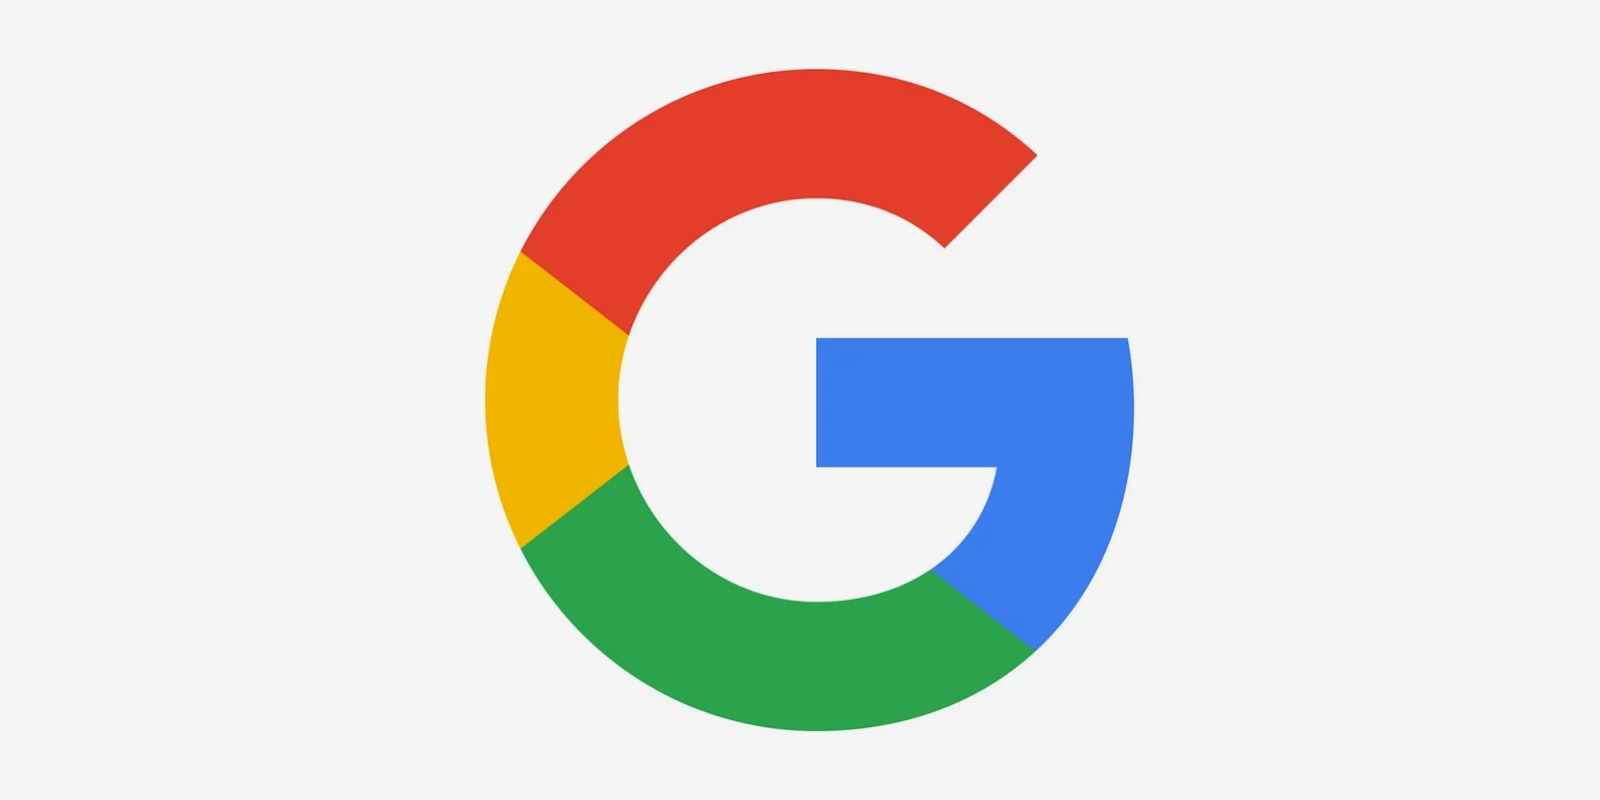 The icon of Google logo